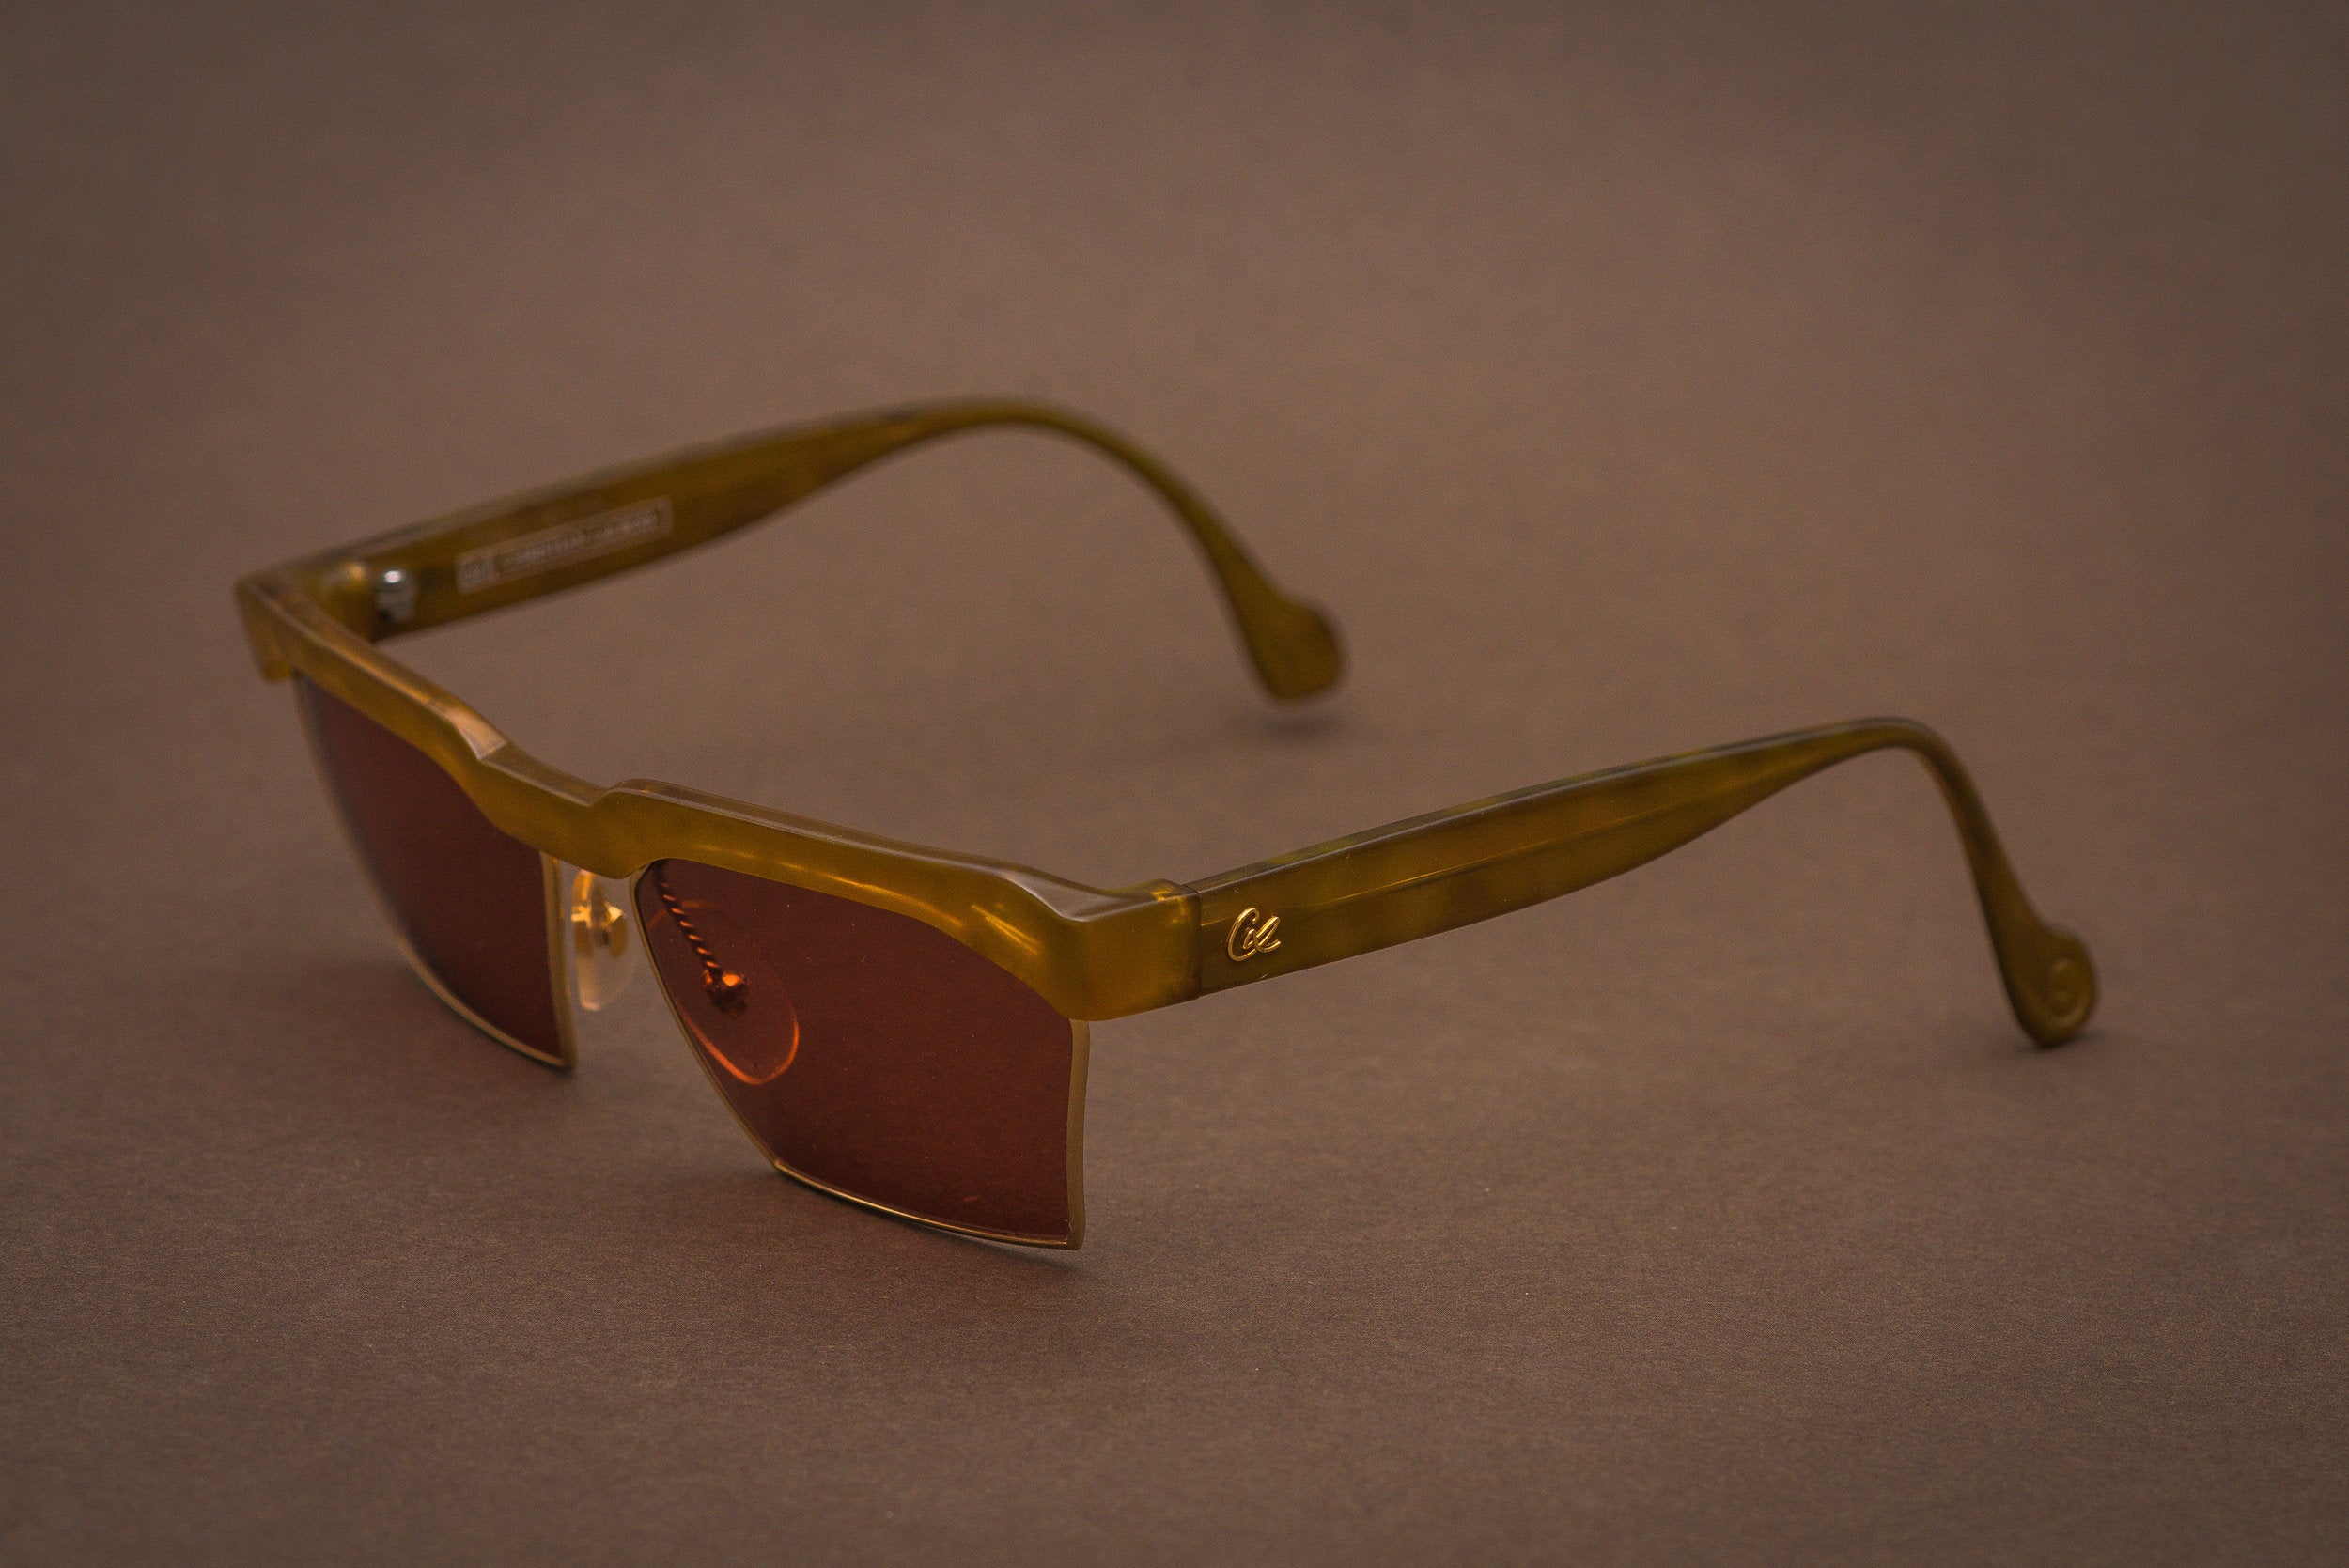 Christian LaCroix 7318 sunglasses